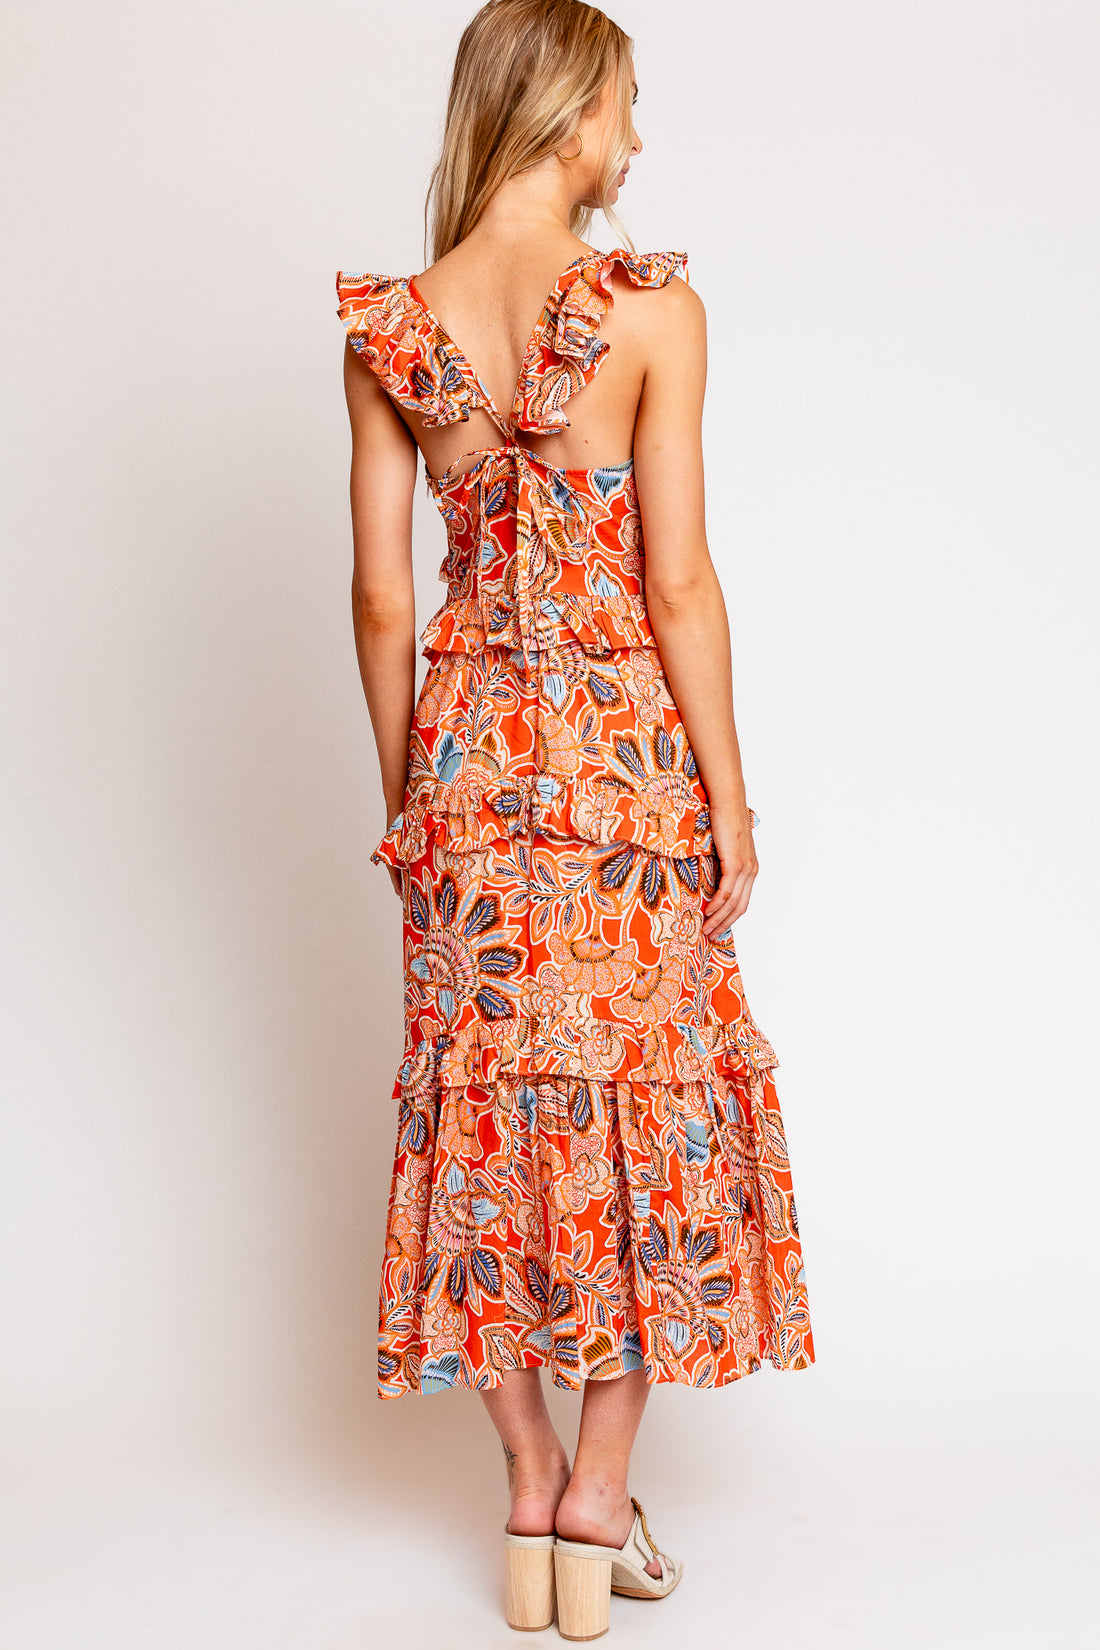 Misa Morrison Dress in Tangerine Floral